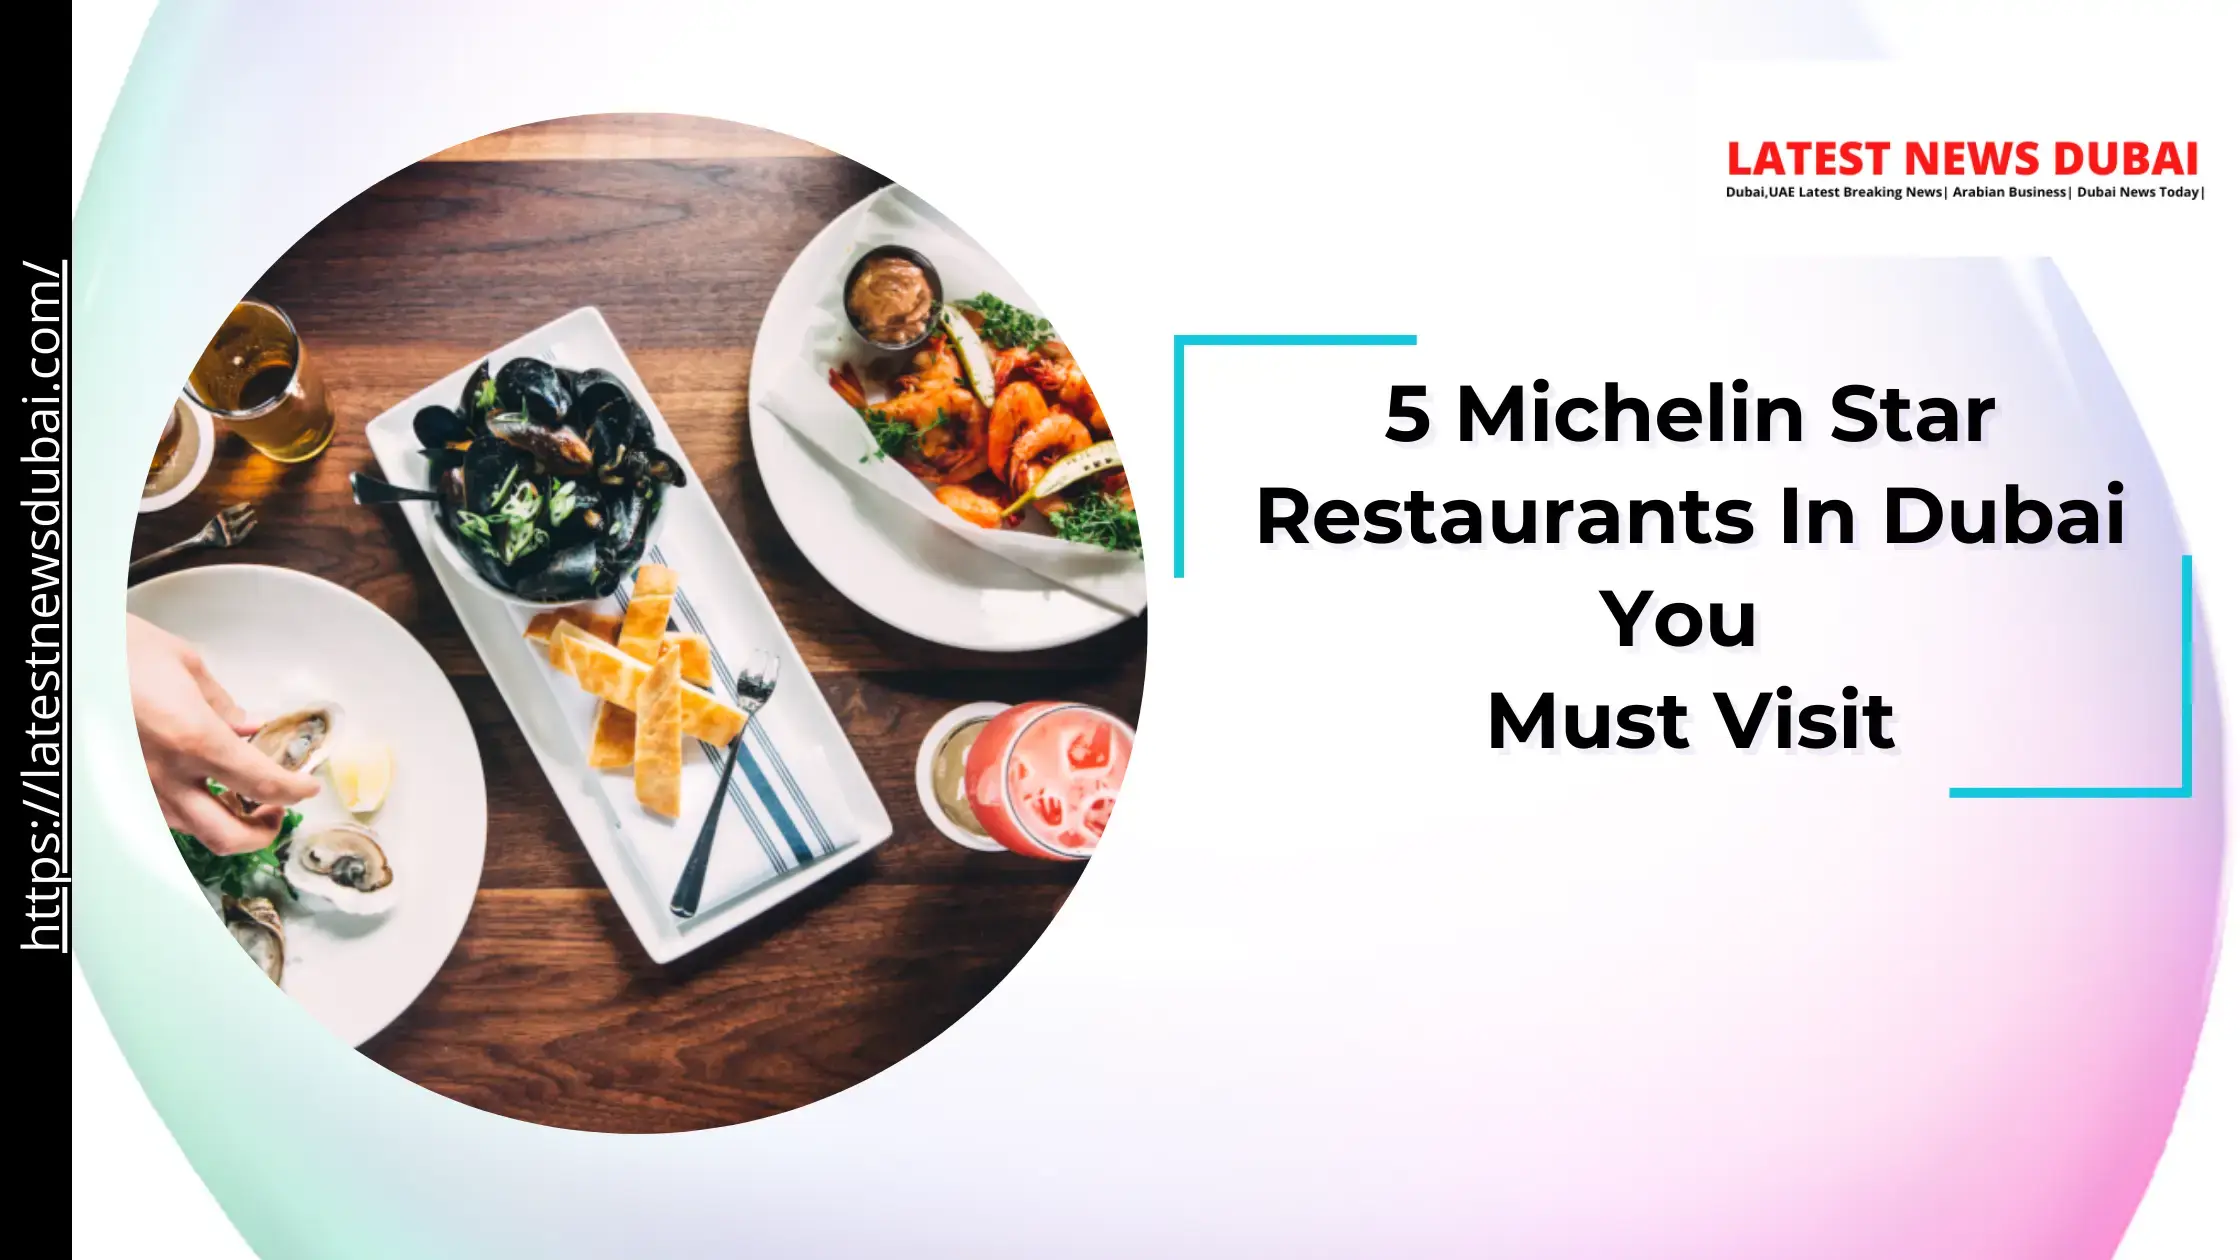 Michelin Star Restaurants In Dubai You Must Visit Right Away